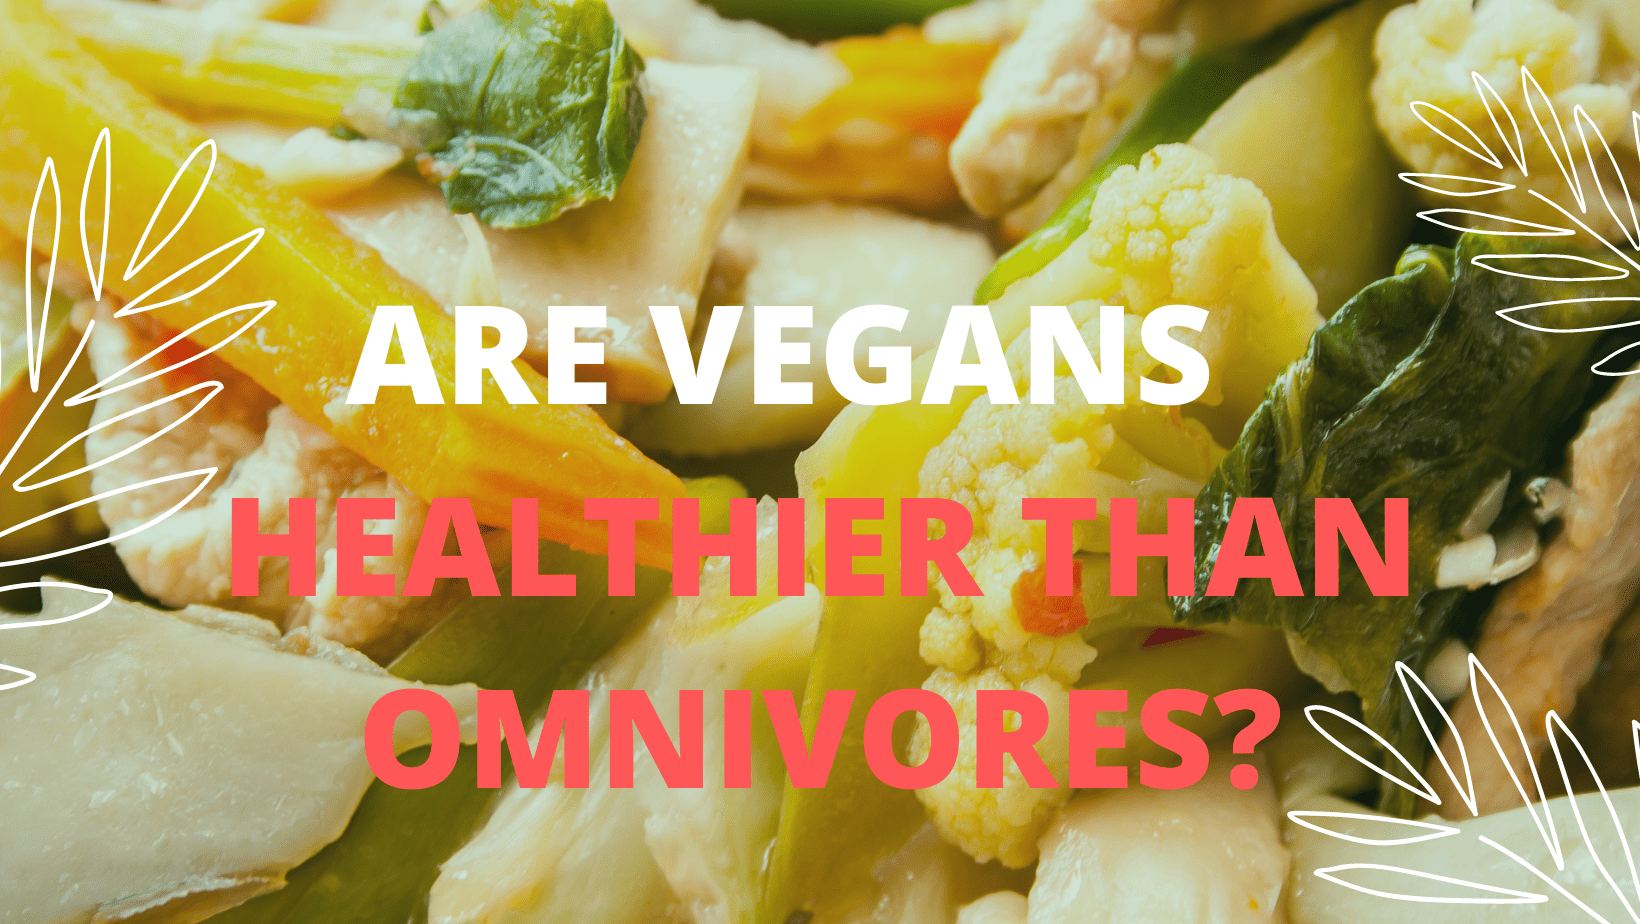 Are vegans healthier than omnivores?